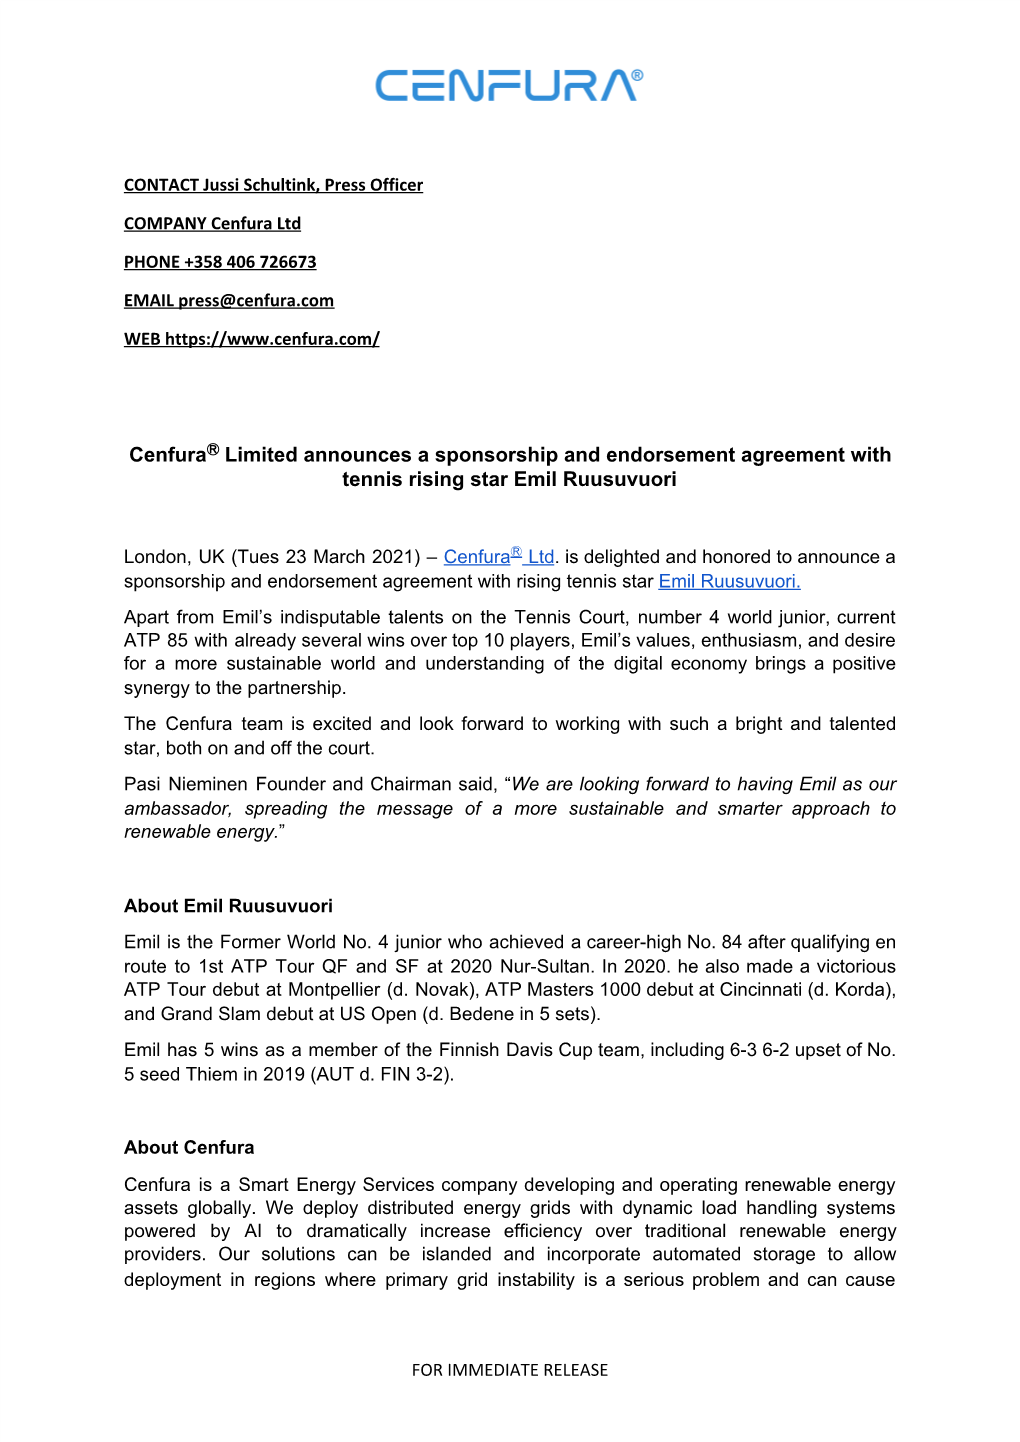 Cenfura​R​ Limited Announces a Sponsorship and Endorsement